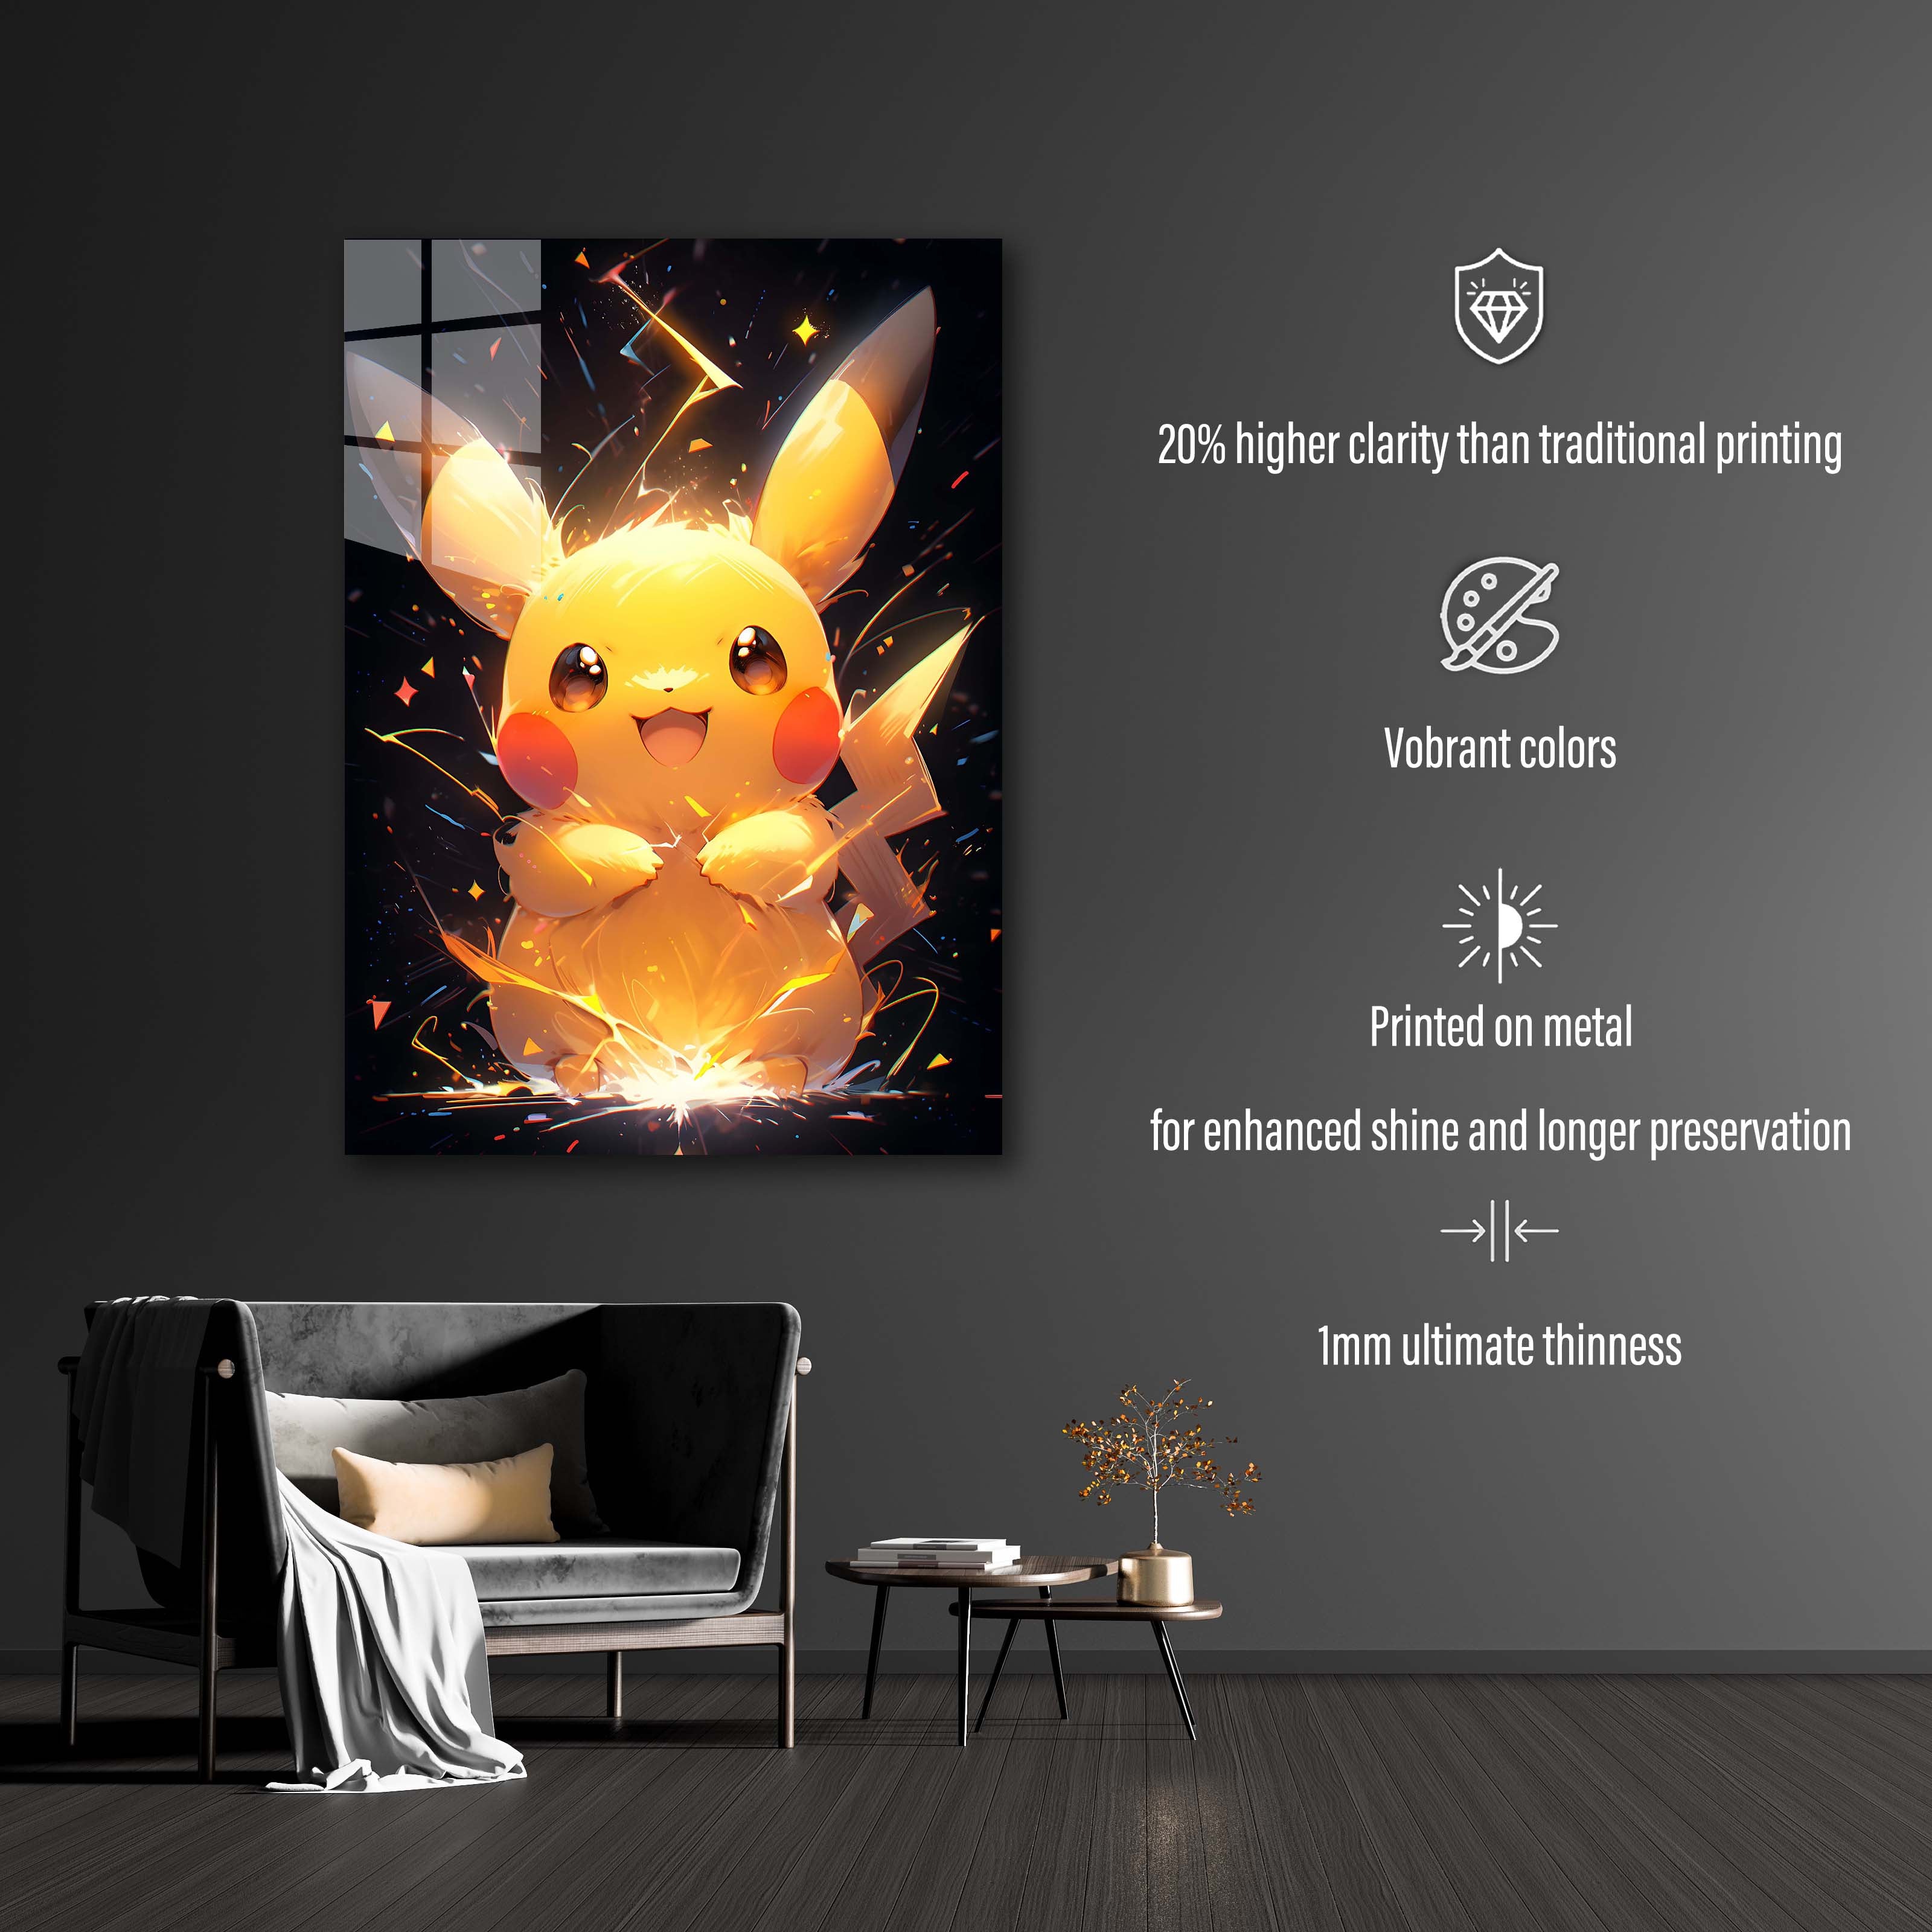 Pikachu _ Pokemon-Artwork by @Artfinity